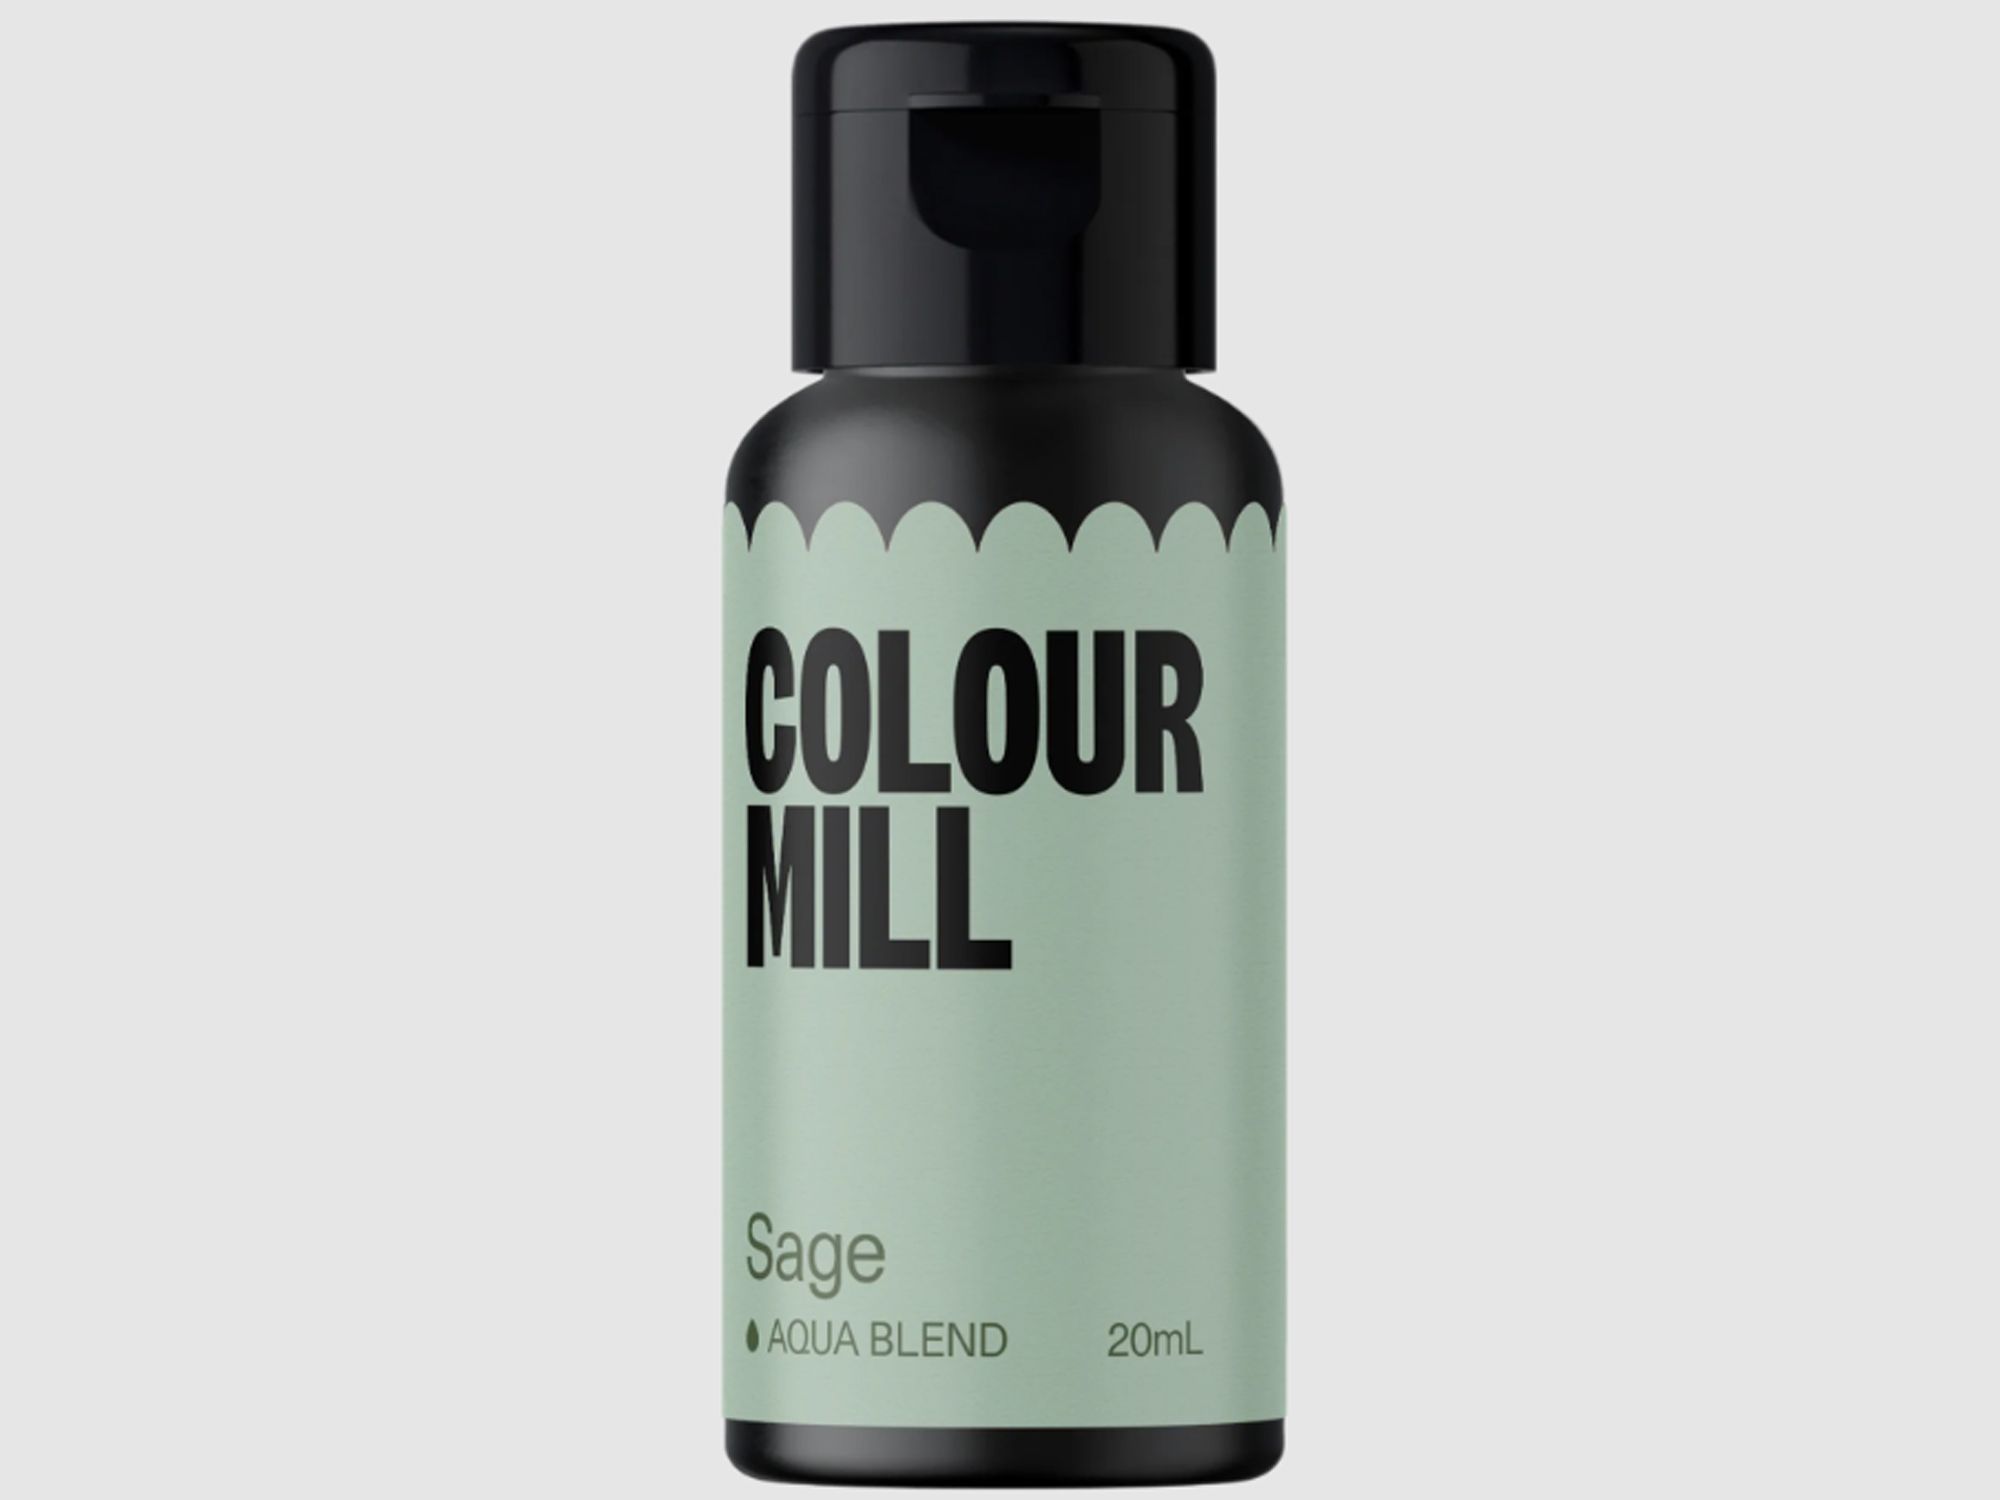 Colour Mill Sage (Aqua Blend) 20ml